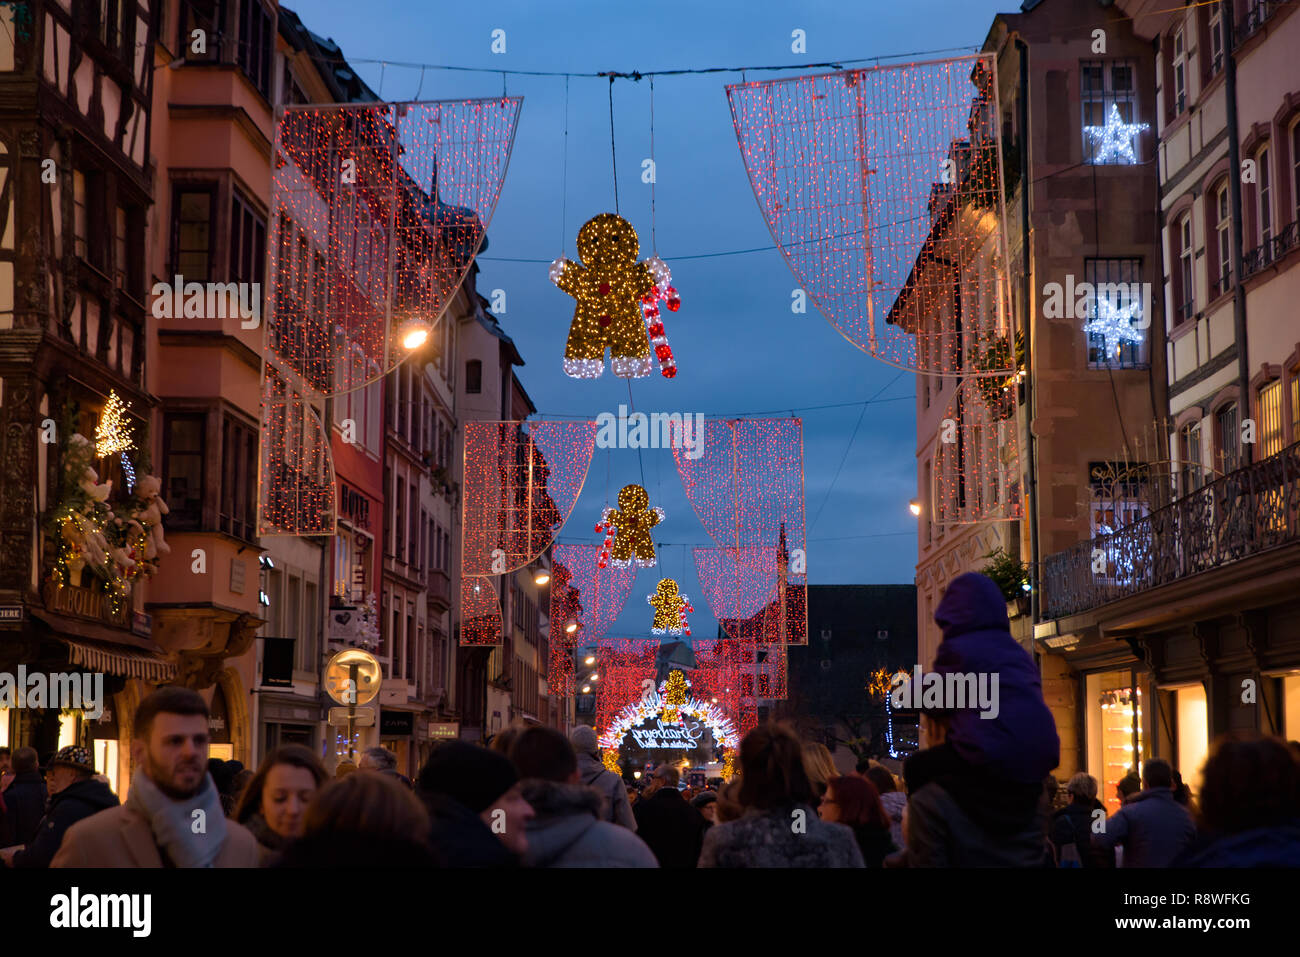 2018 Christmas market in Strasbourg, the Capital de Noel in France. A terrorist attack happened on 11th December. Stock Photo